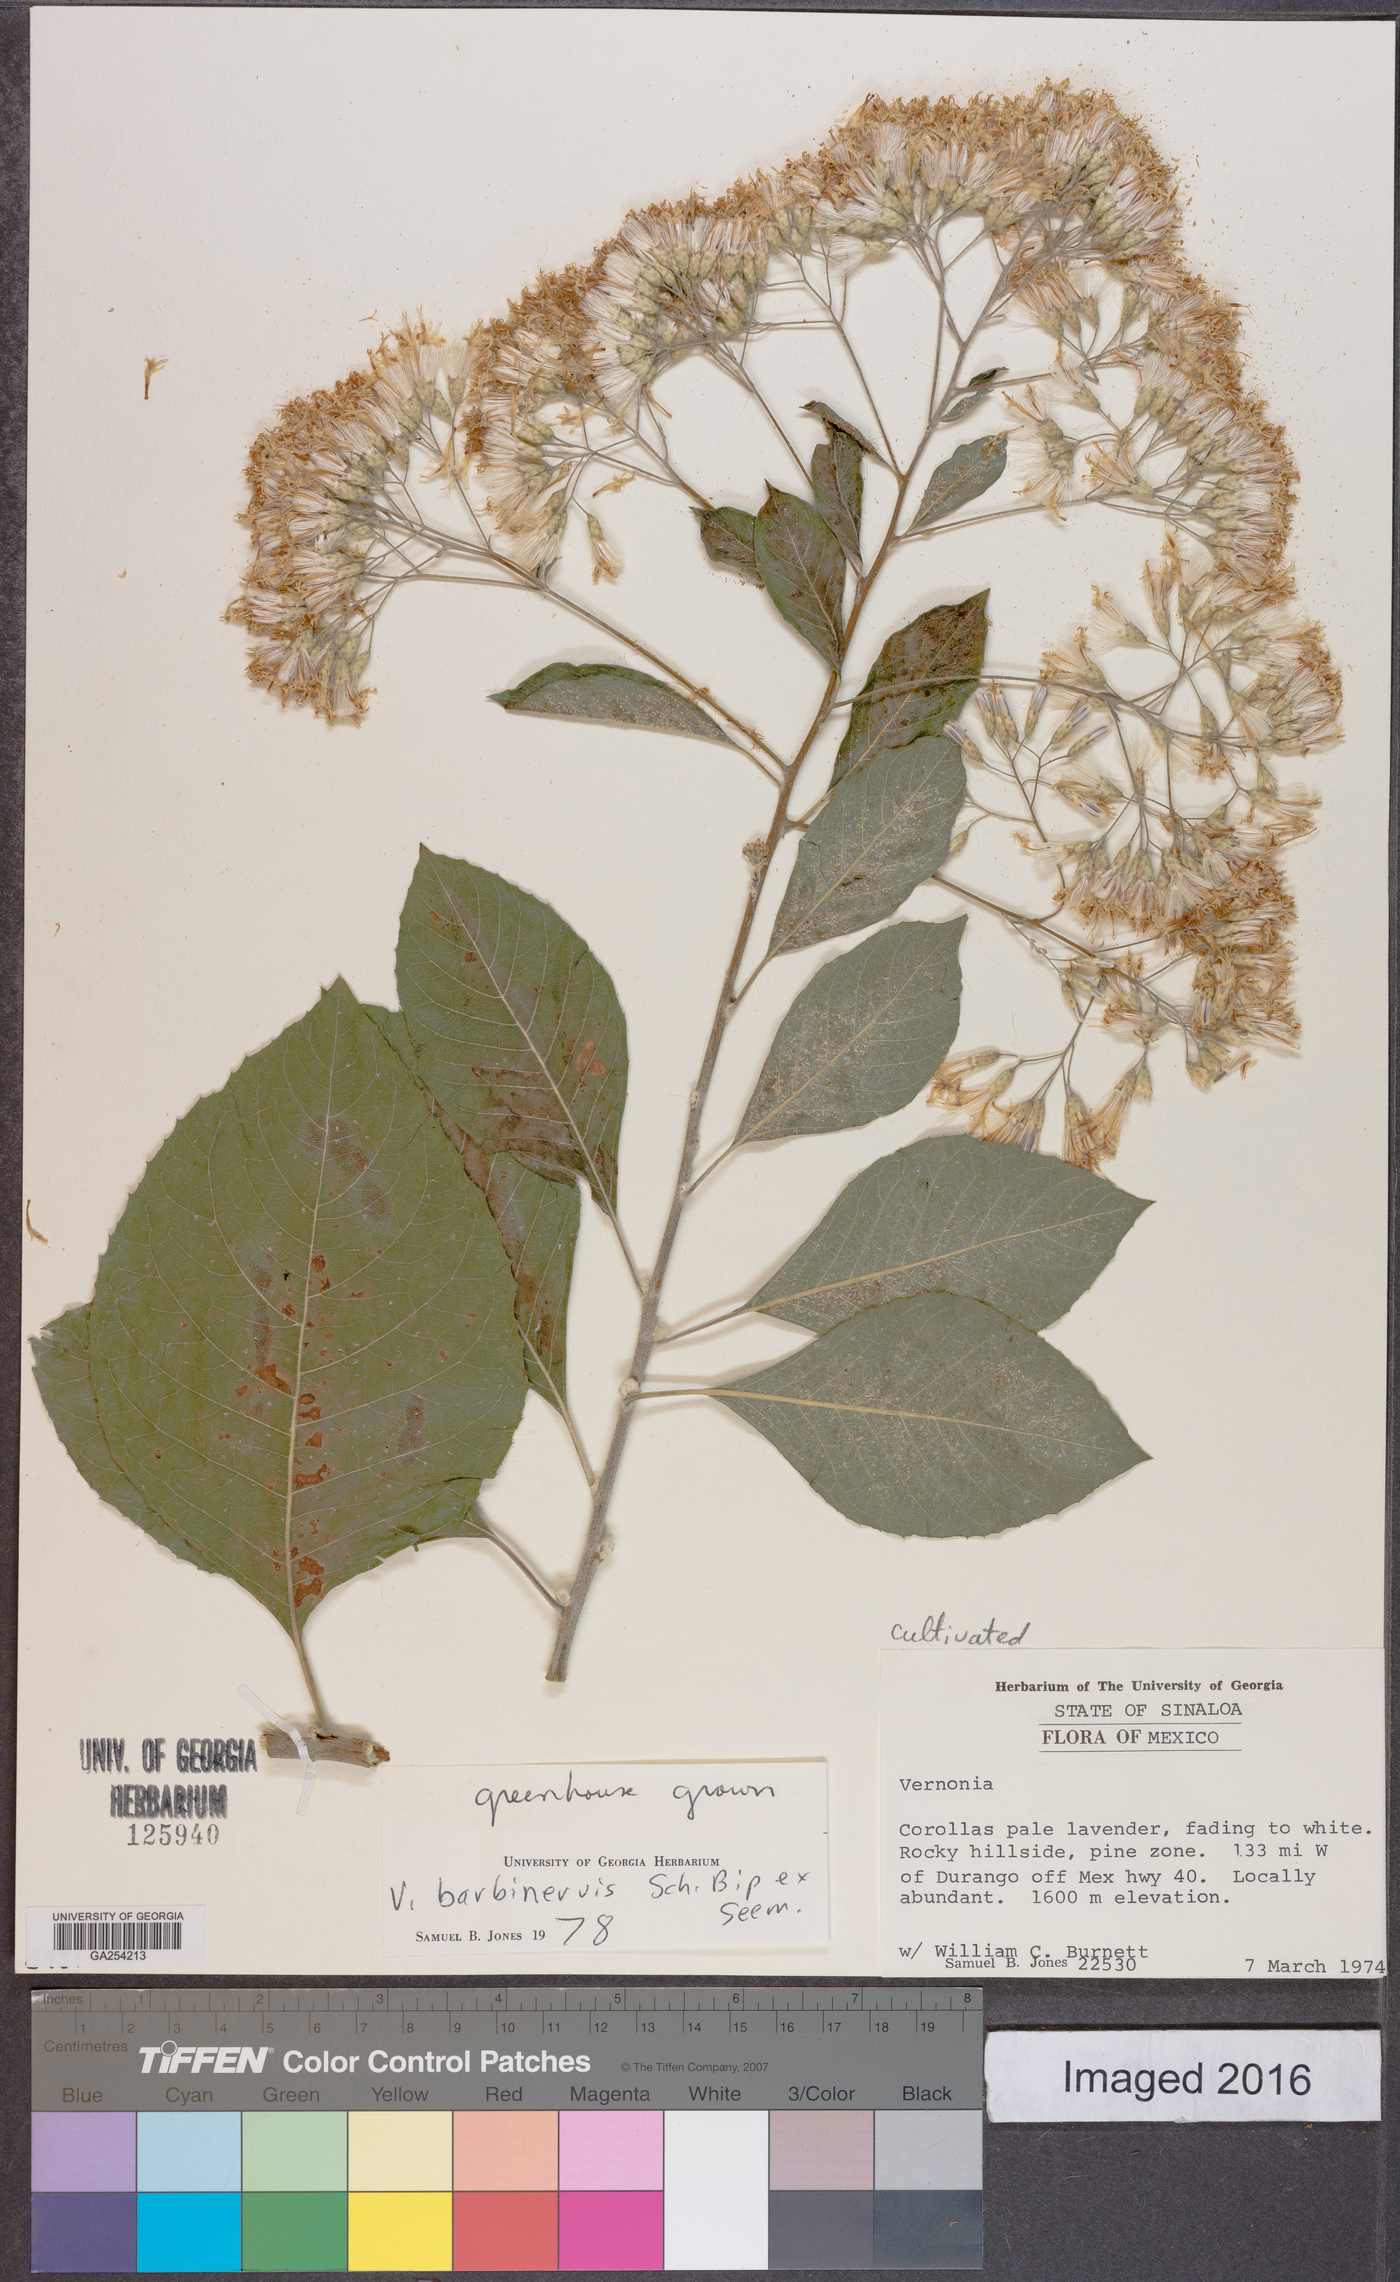 Vernonia barbinervis image